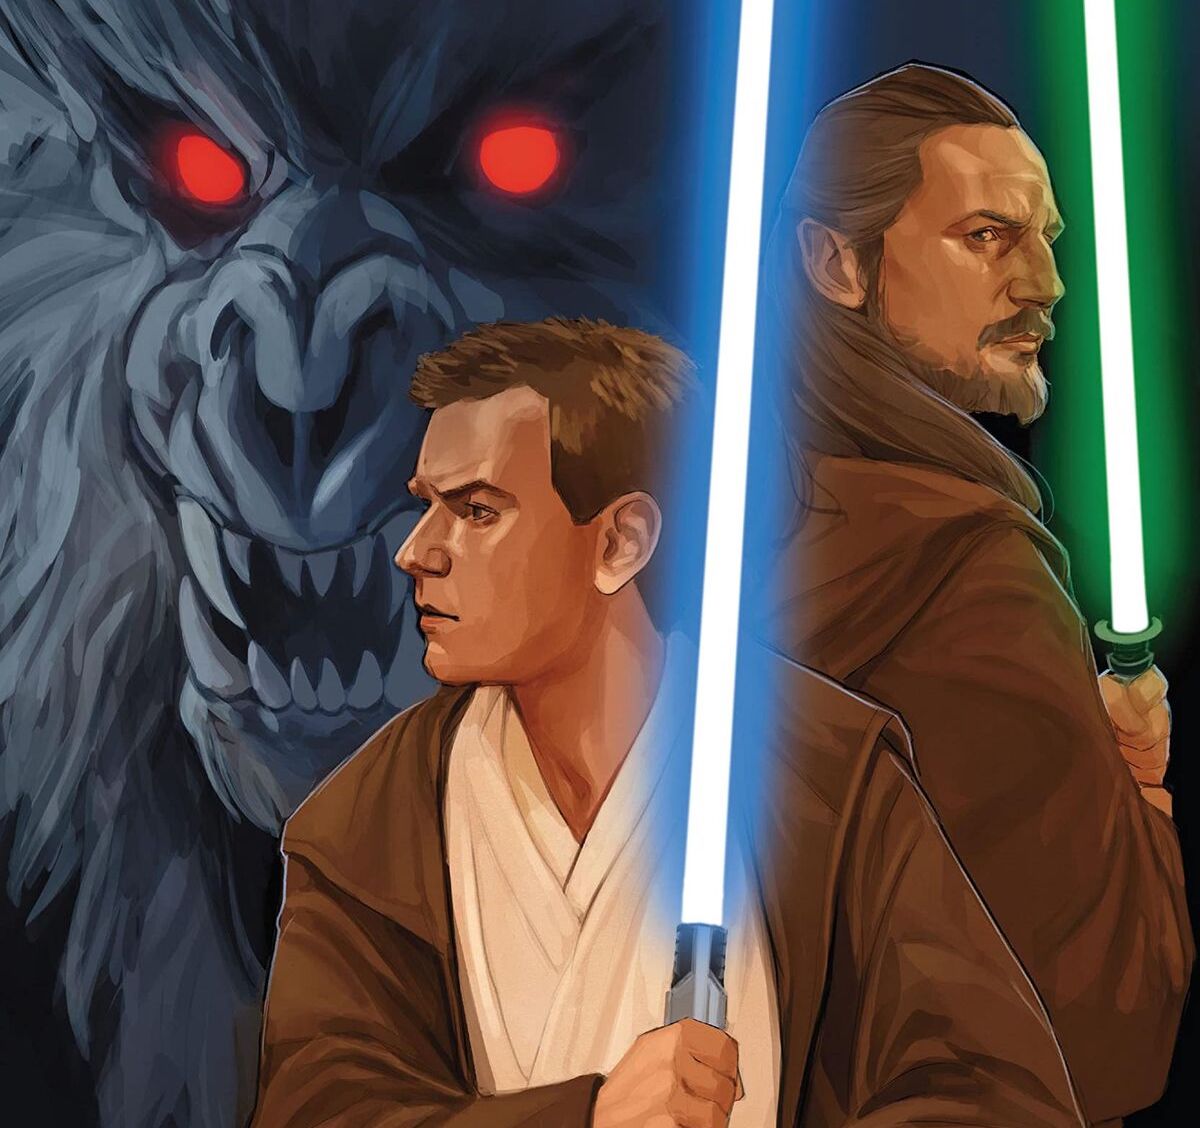 'Star Wars: Obi-Wan' #2 blends good sci-fi and horror elements well